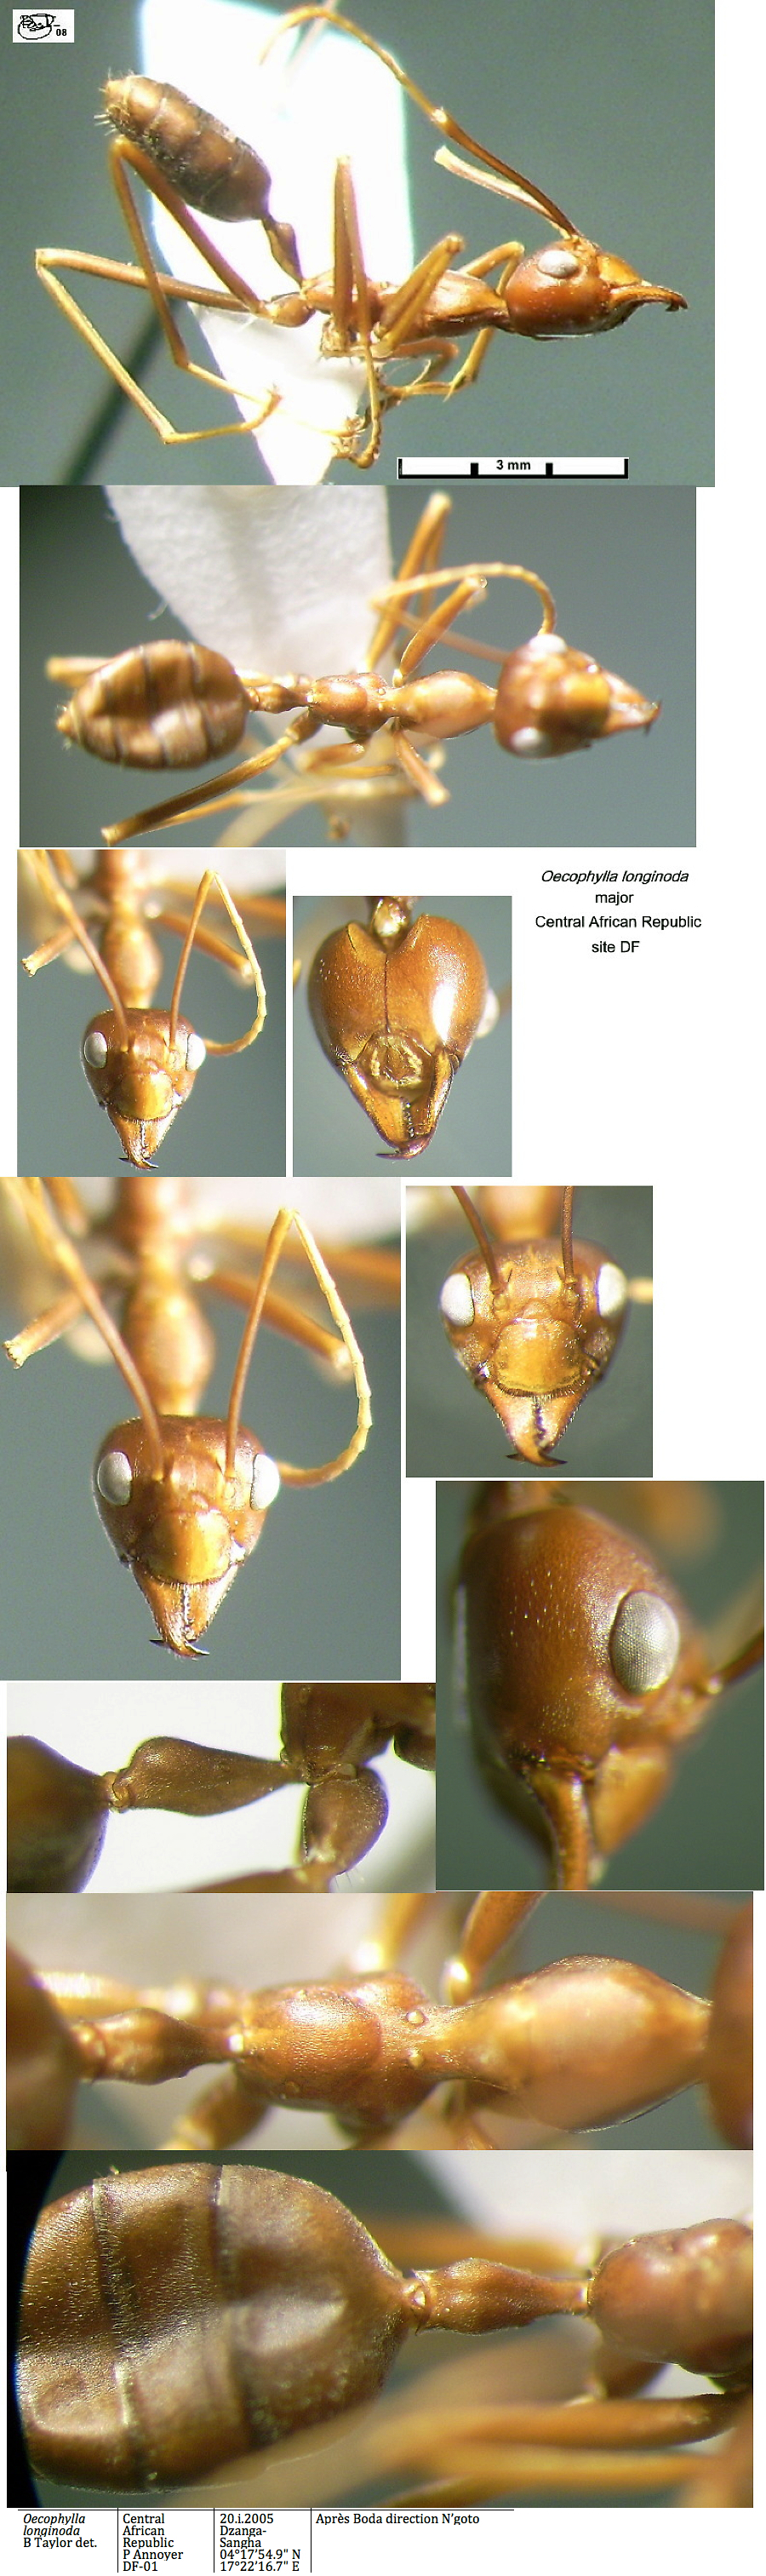 {Oecophylla longinoda type major}